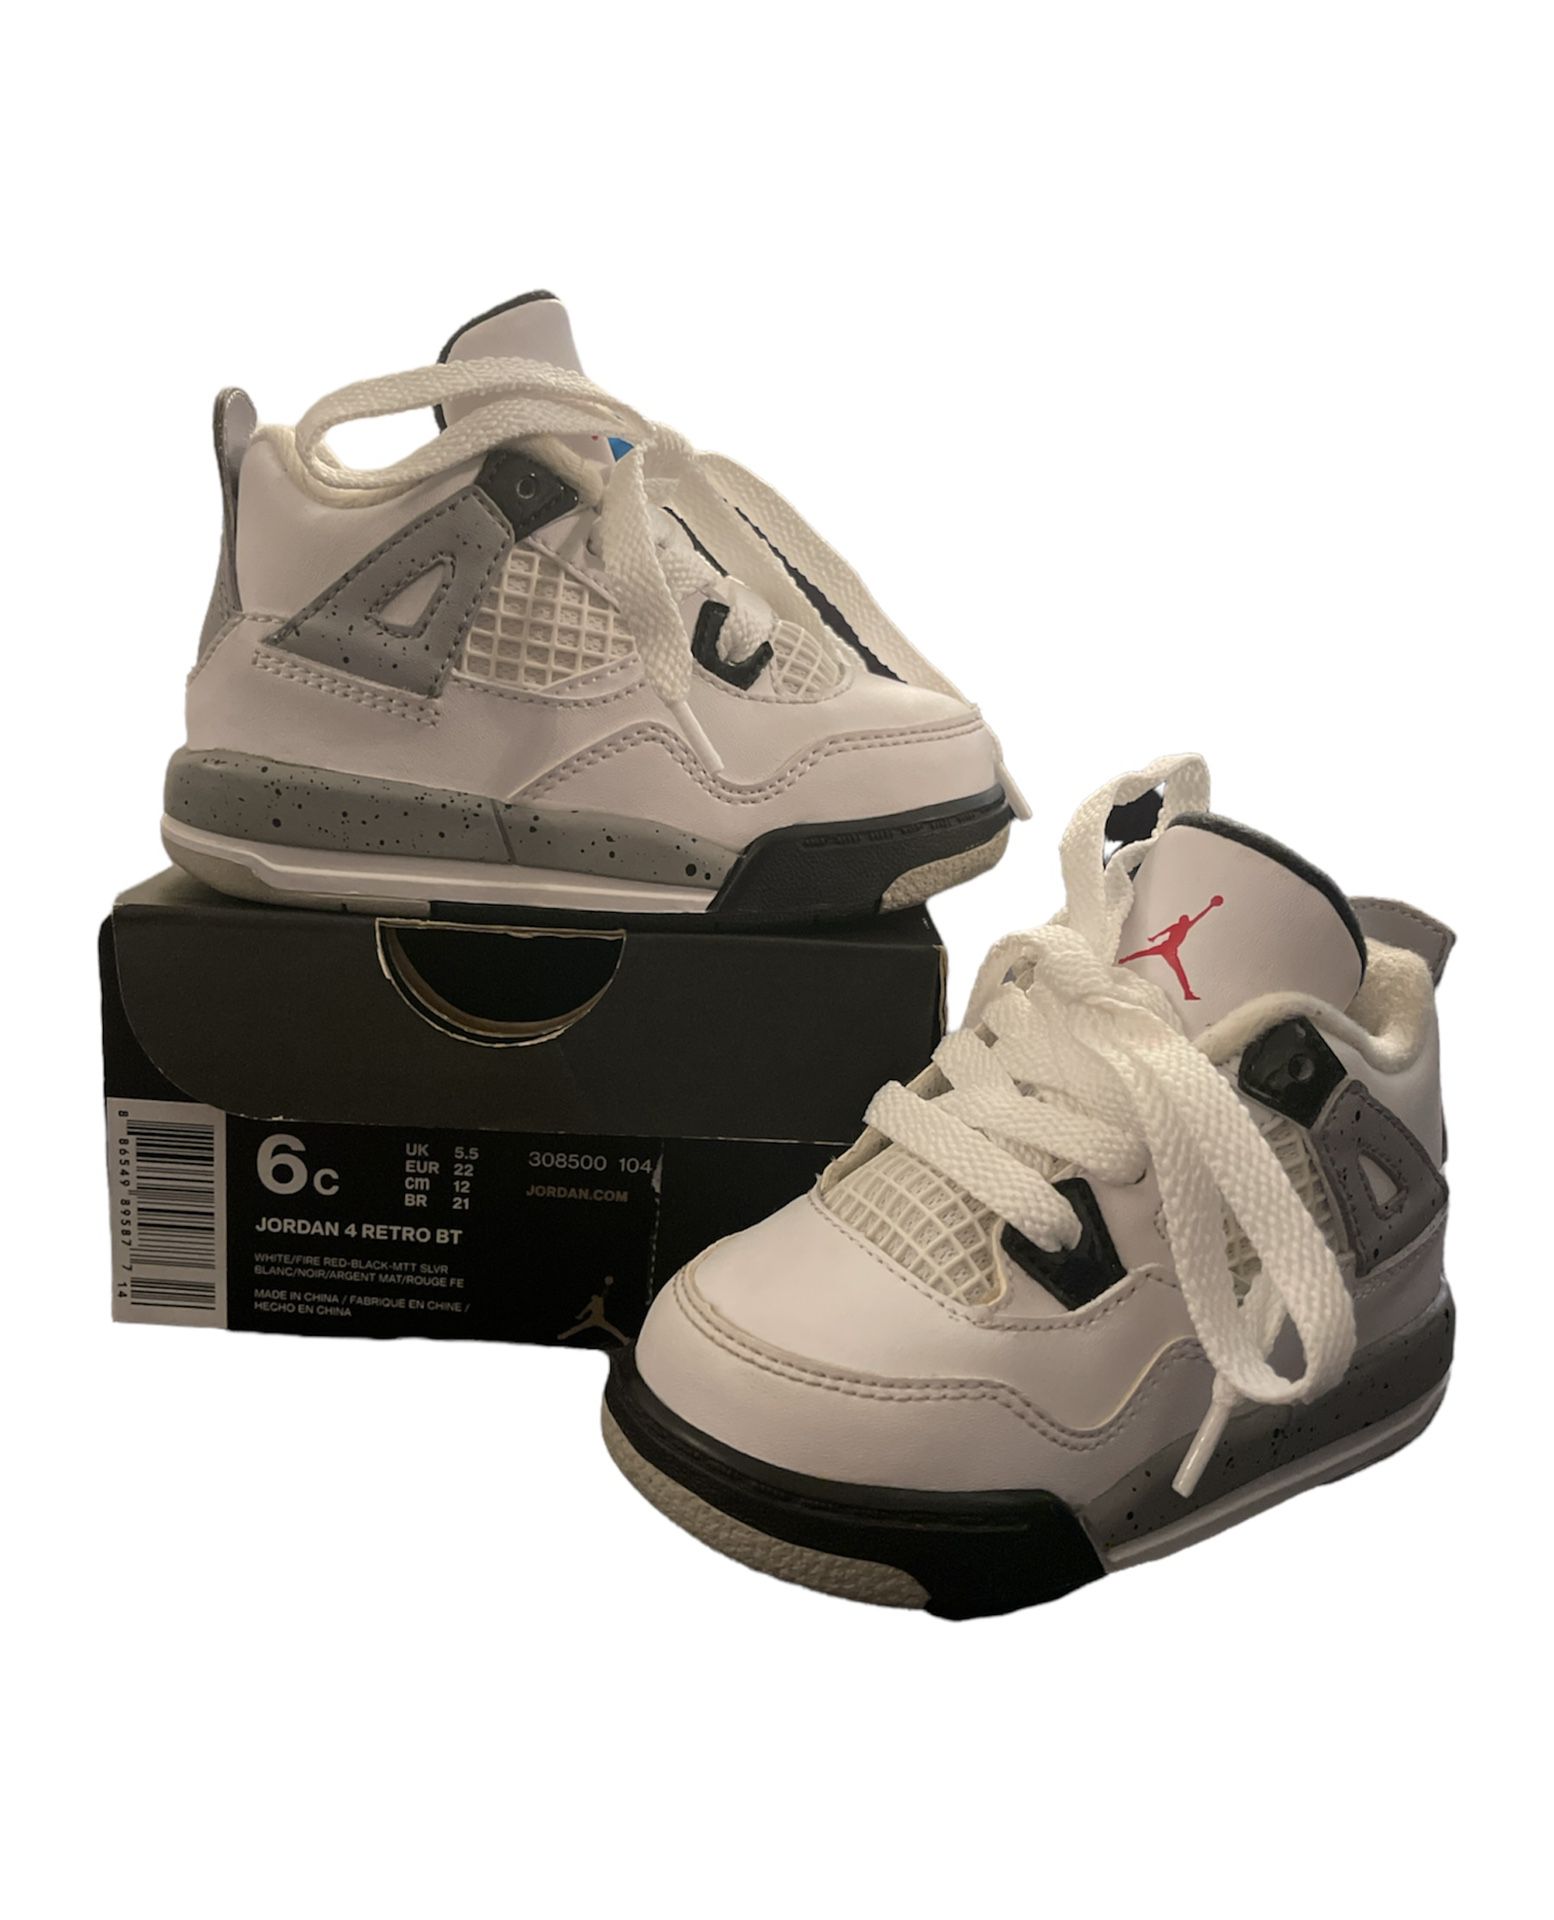 Jordan 4 Retro - Sz 6c Kids